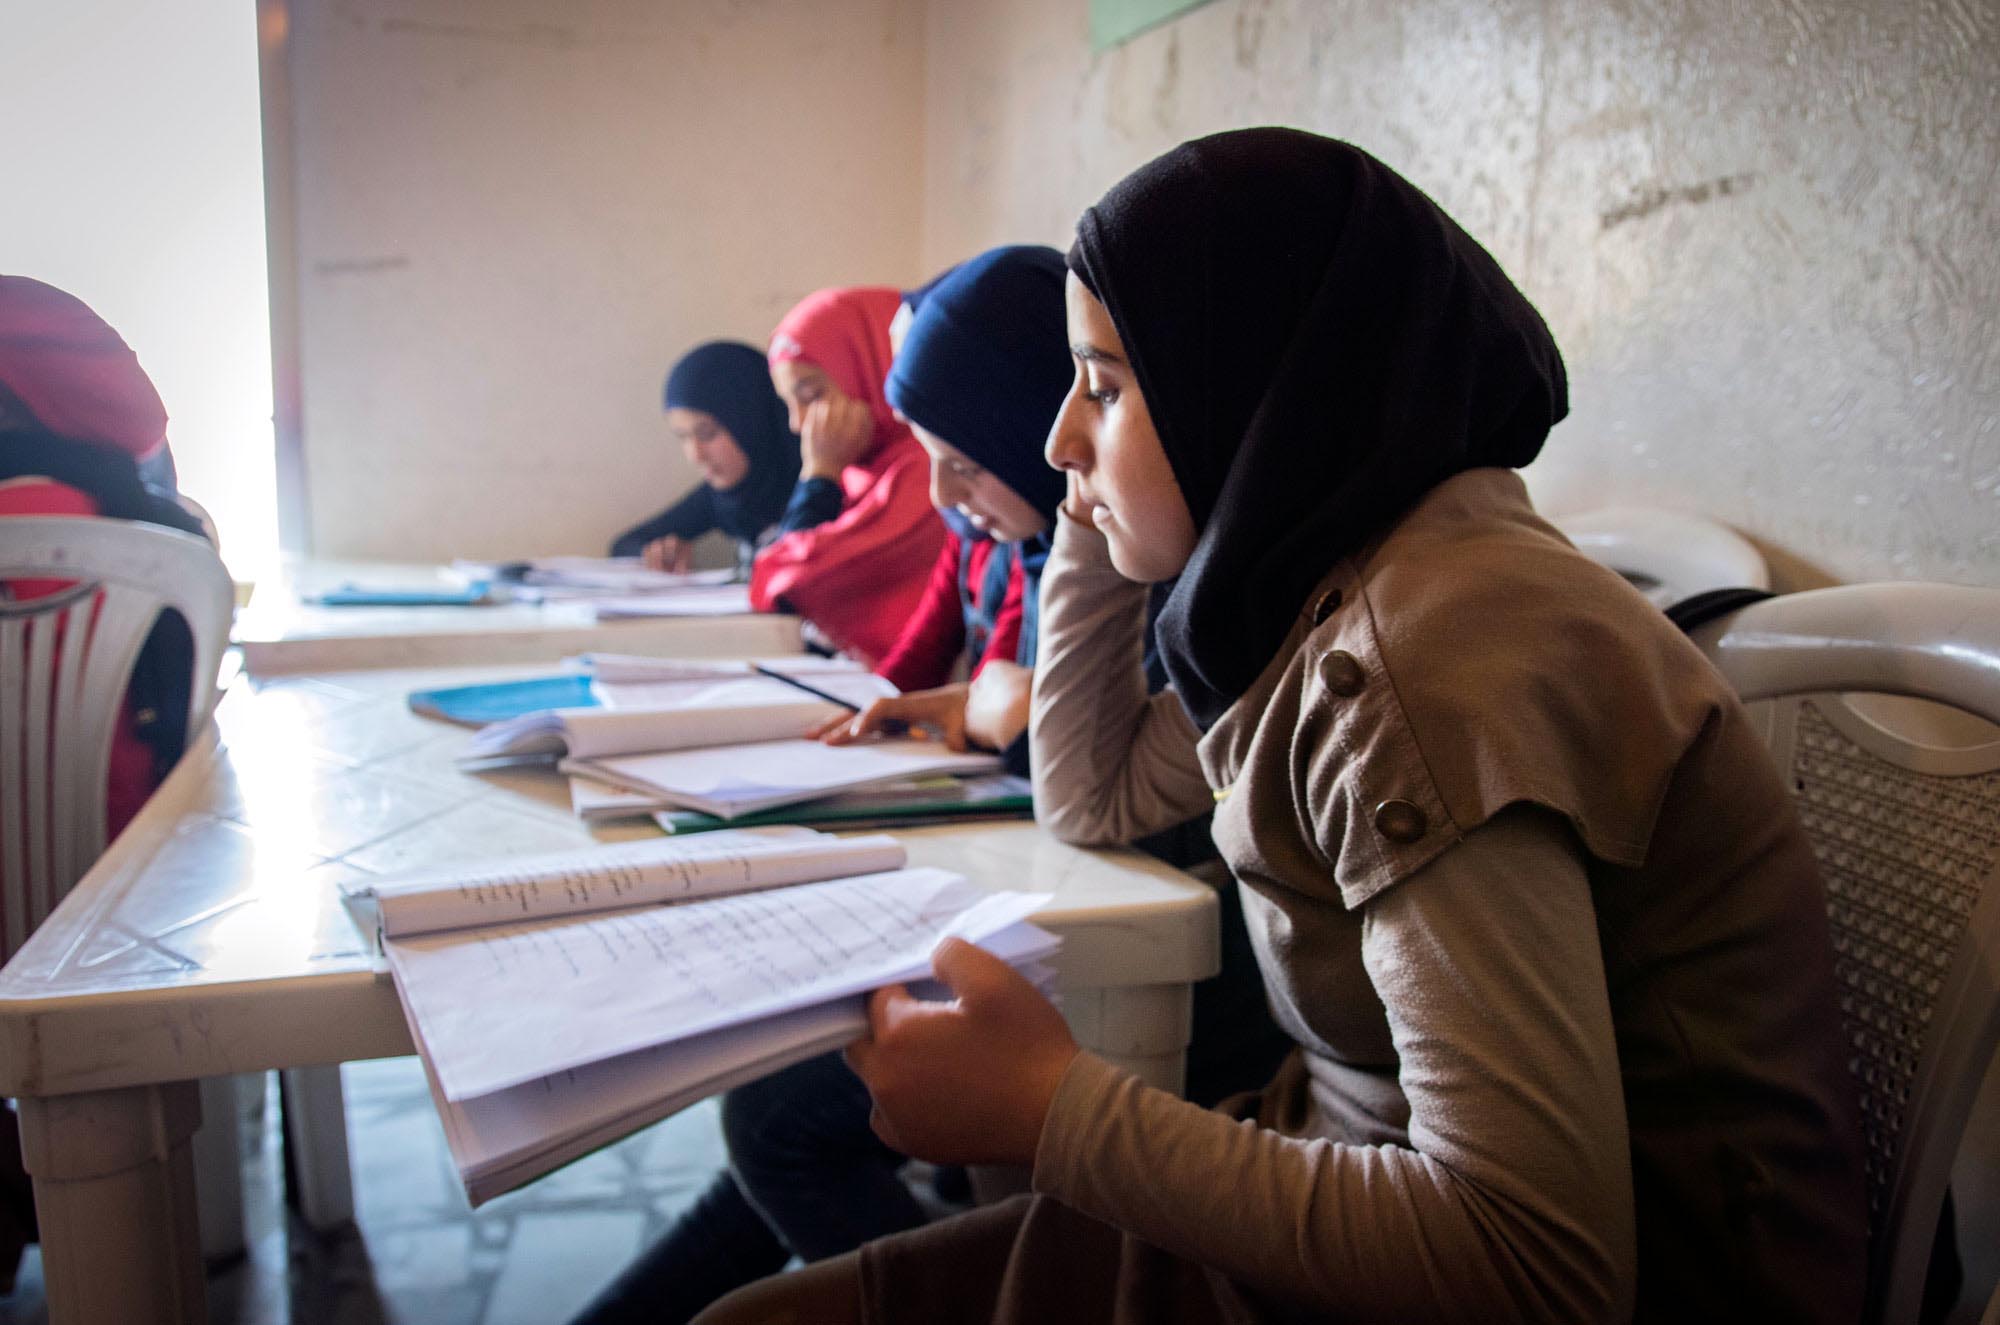 non formal education lebanon emrgency refugee syrian